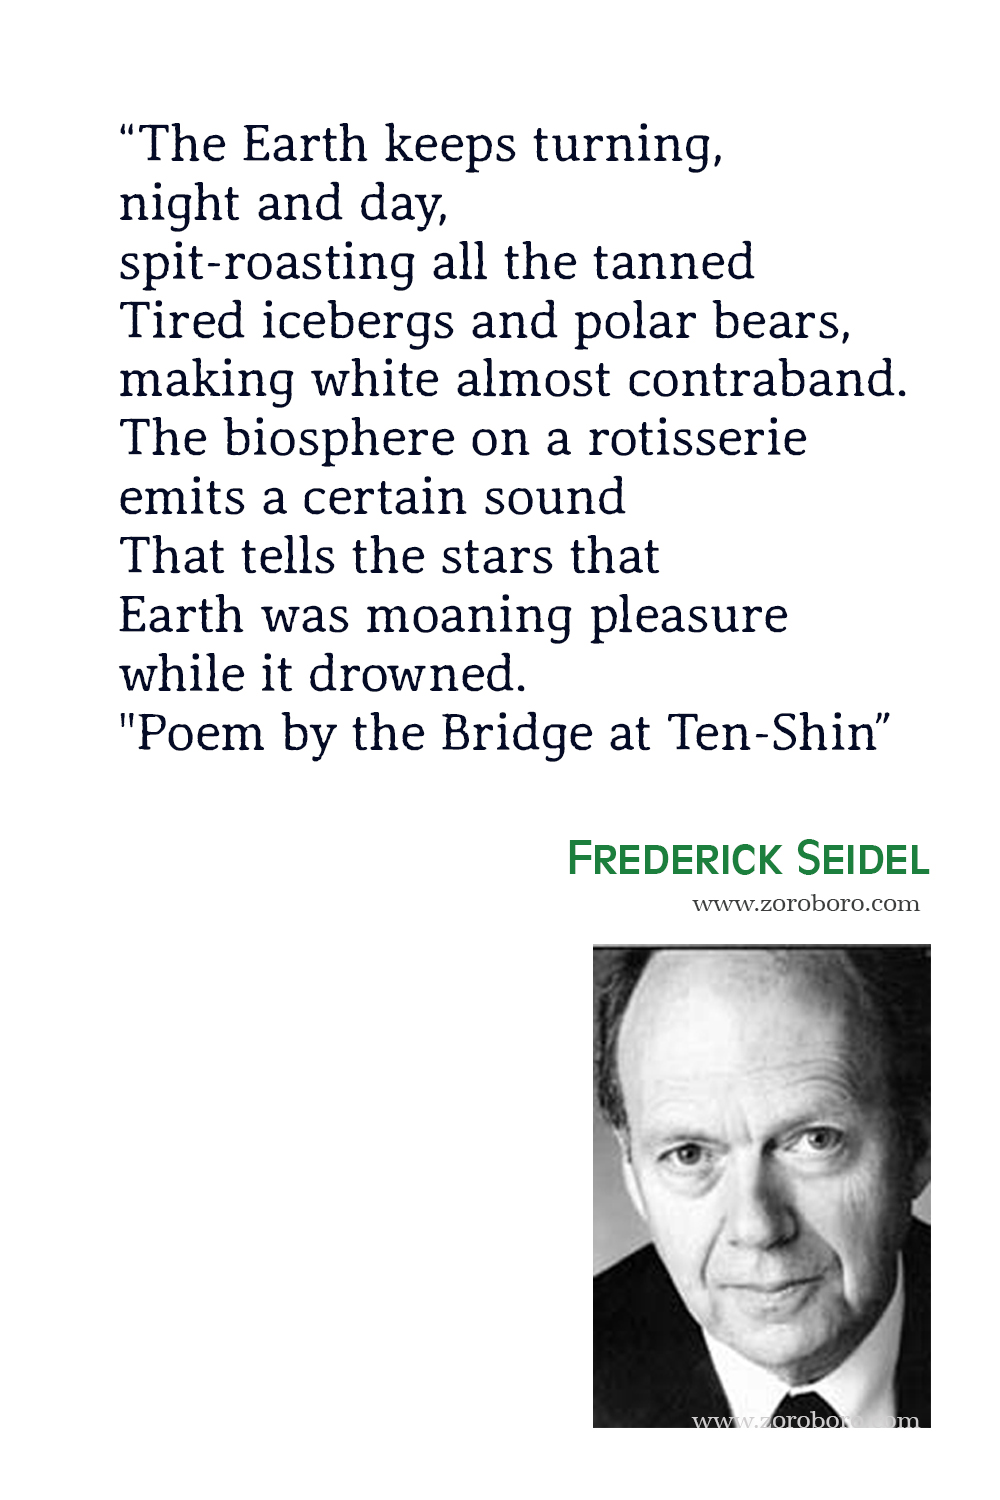 Frederick Seidel Quotes, Frederick Seidel Poems, Frederick Seidel Poetry, Frederick Seidel Books, Frederick Seidel